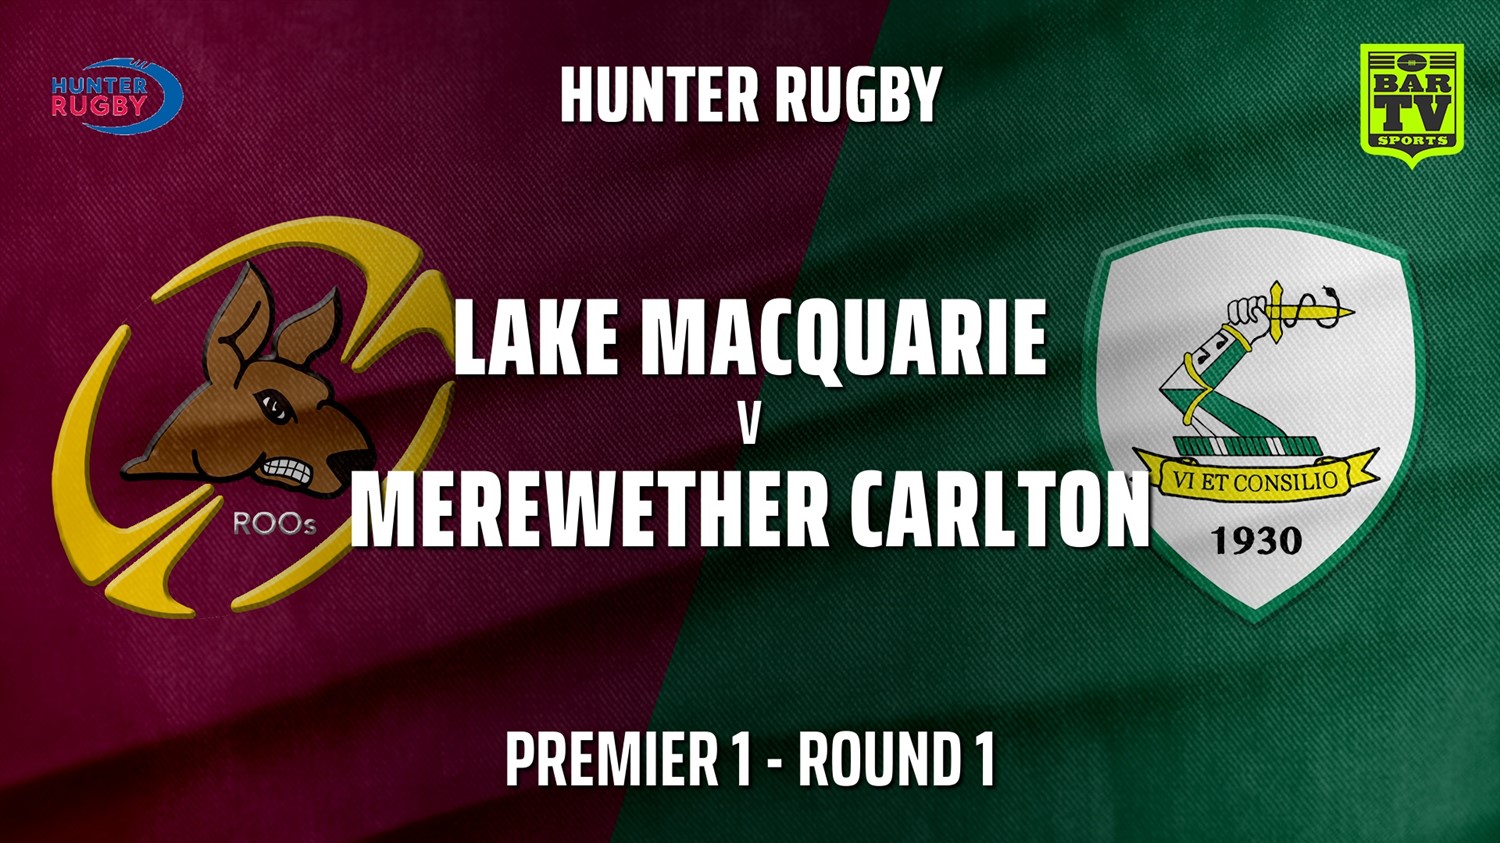 HRU Round 1 - Premier 1 - Lake Macquarie v Merewether Carlton Slate Image